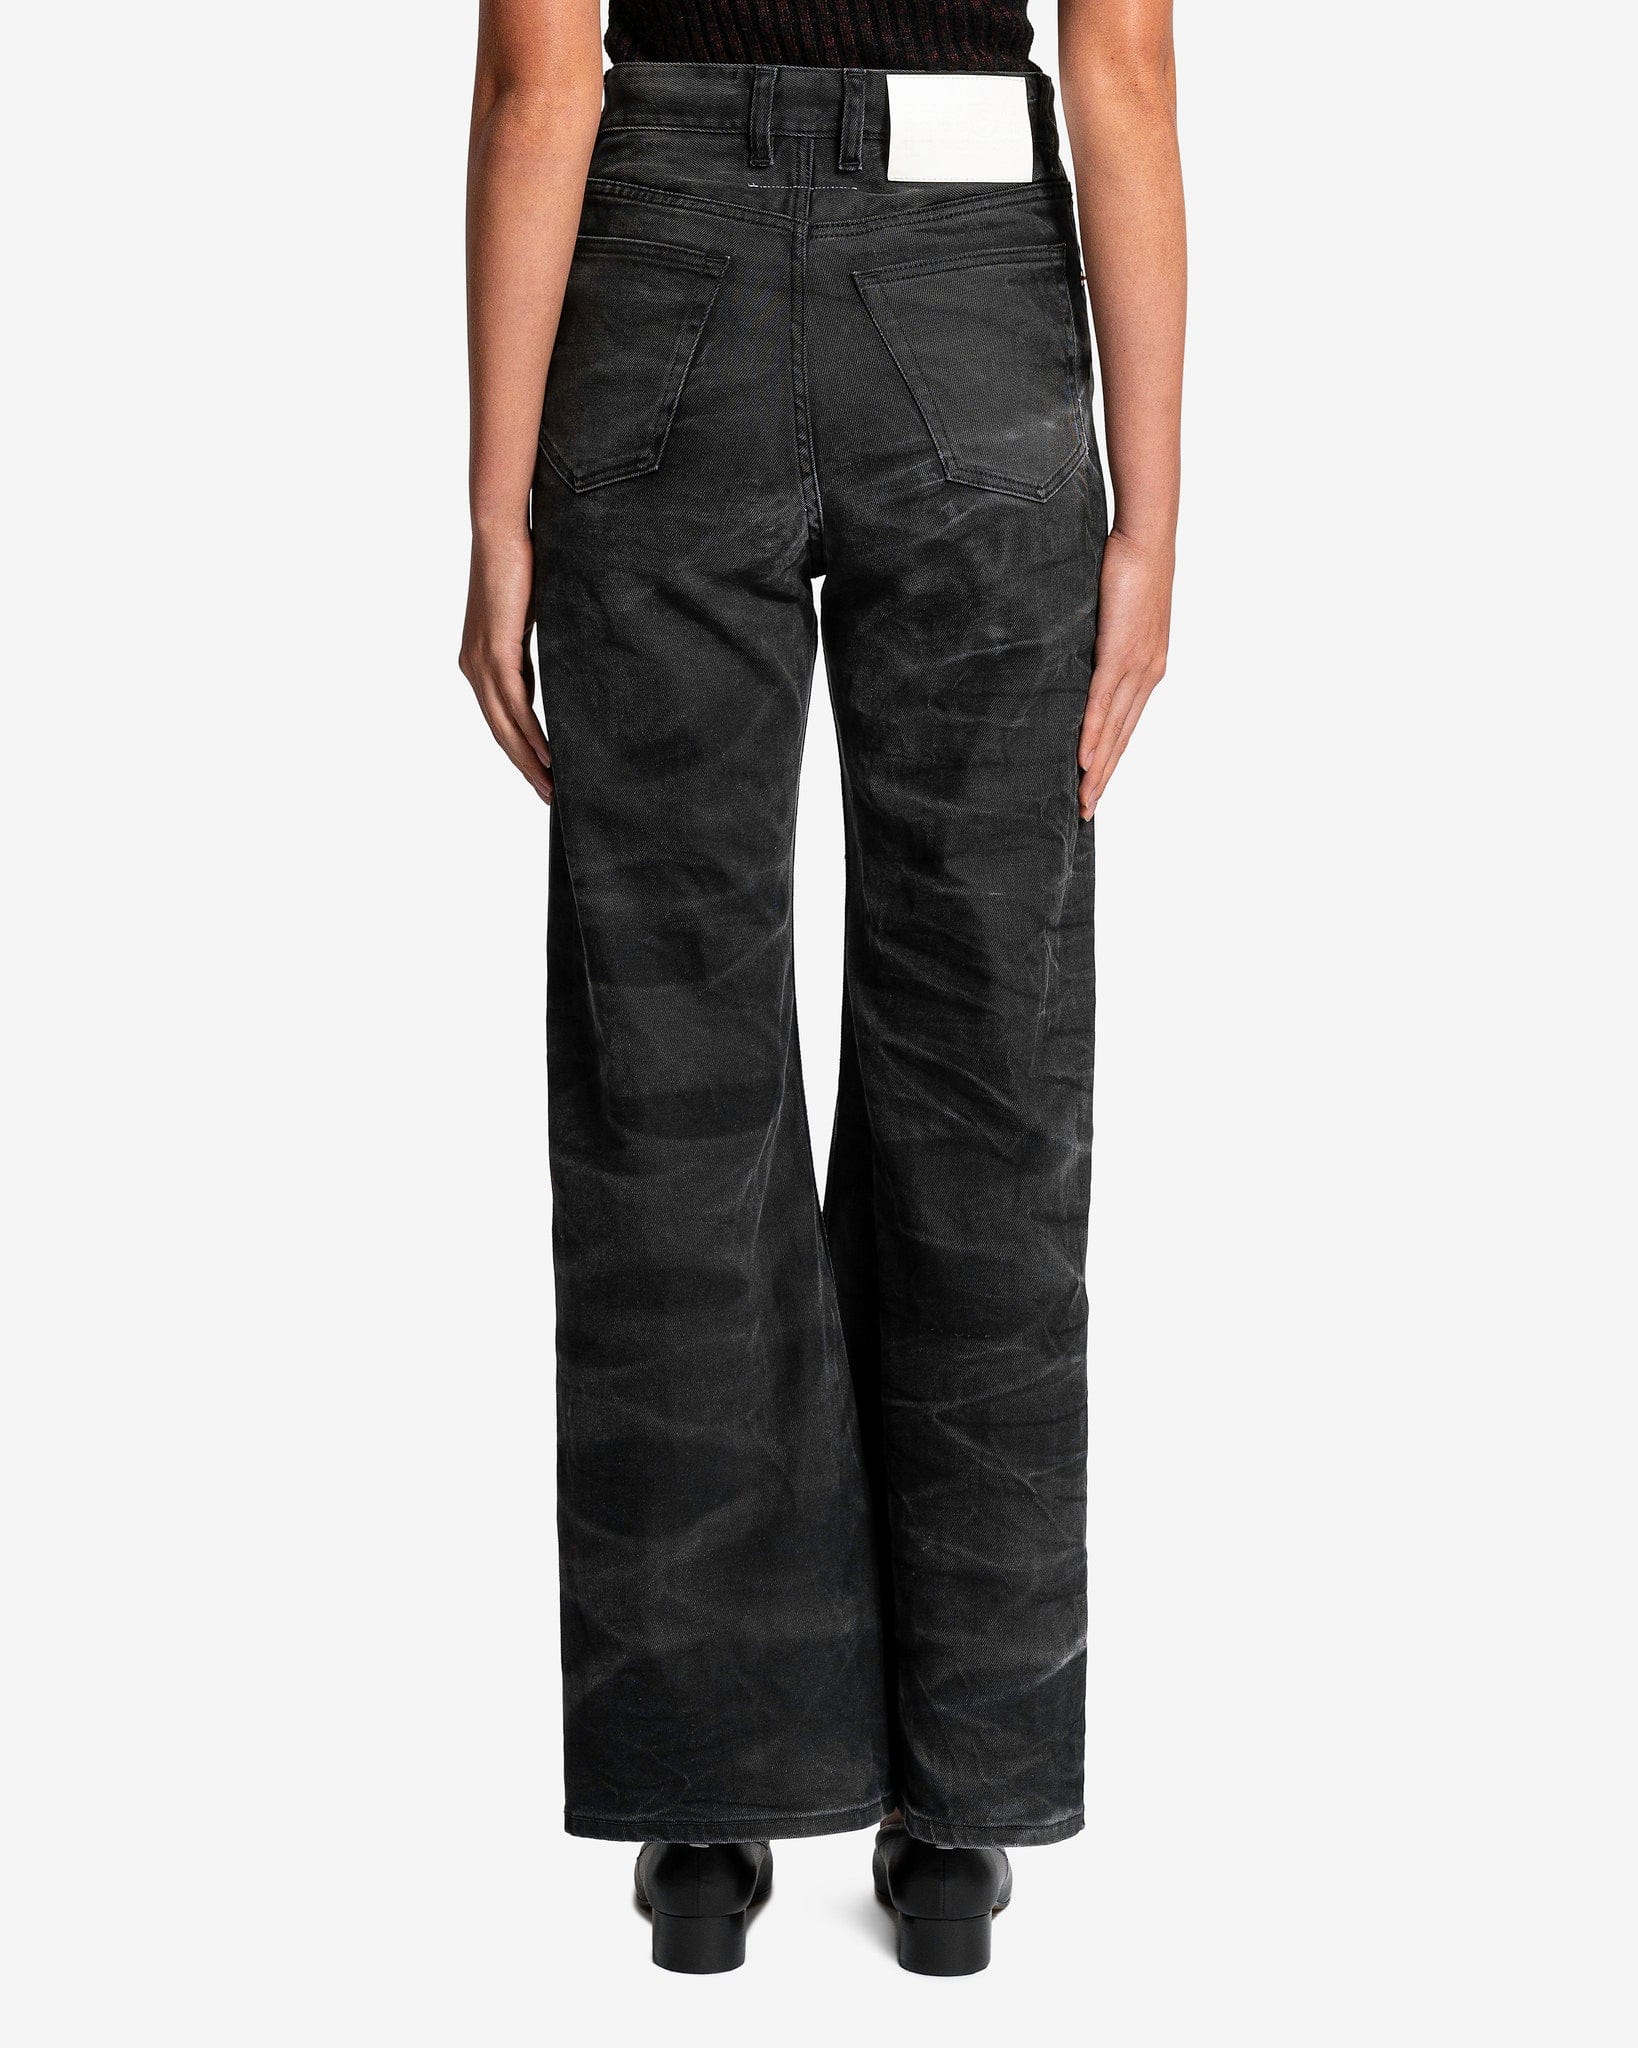 Baggy 5 Pocket Jeans in Washed Black